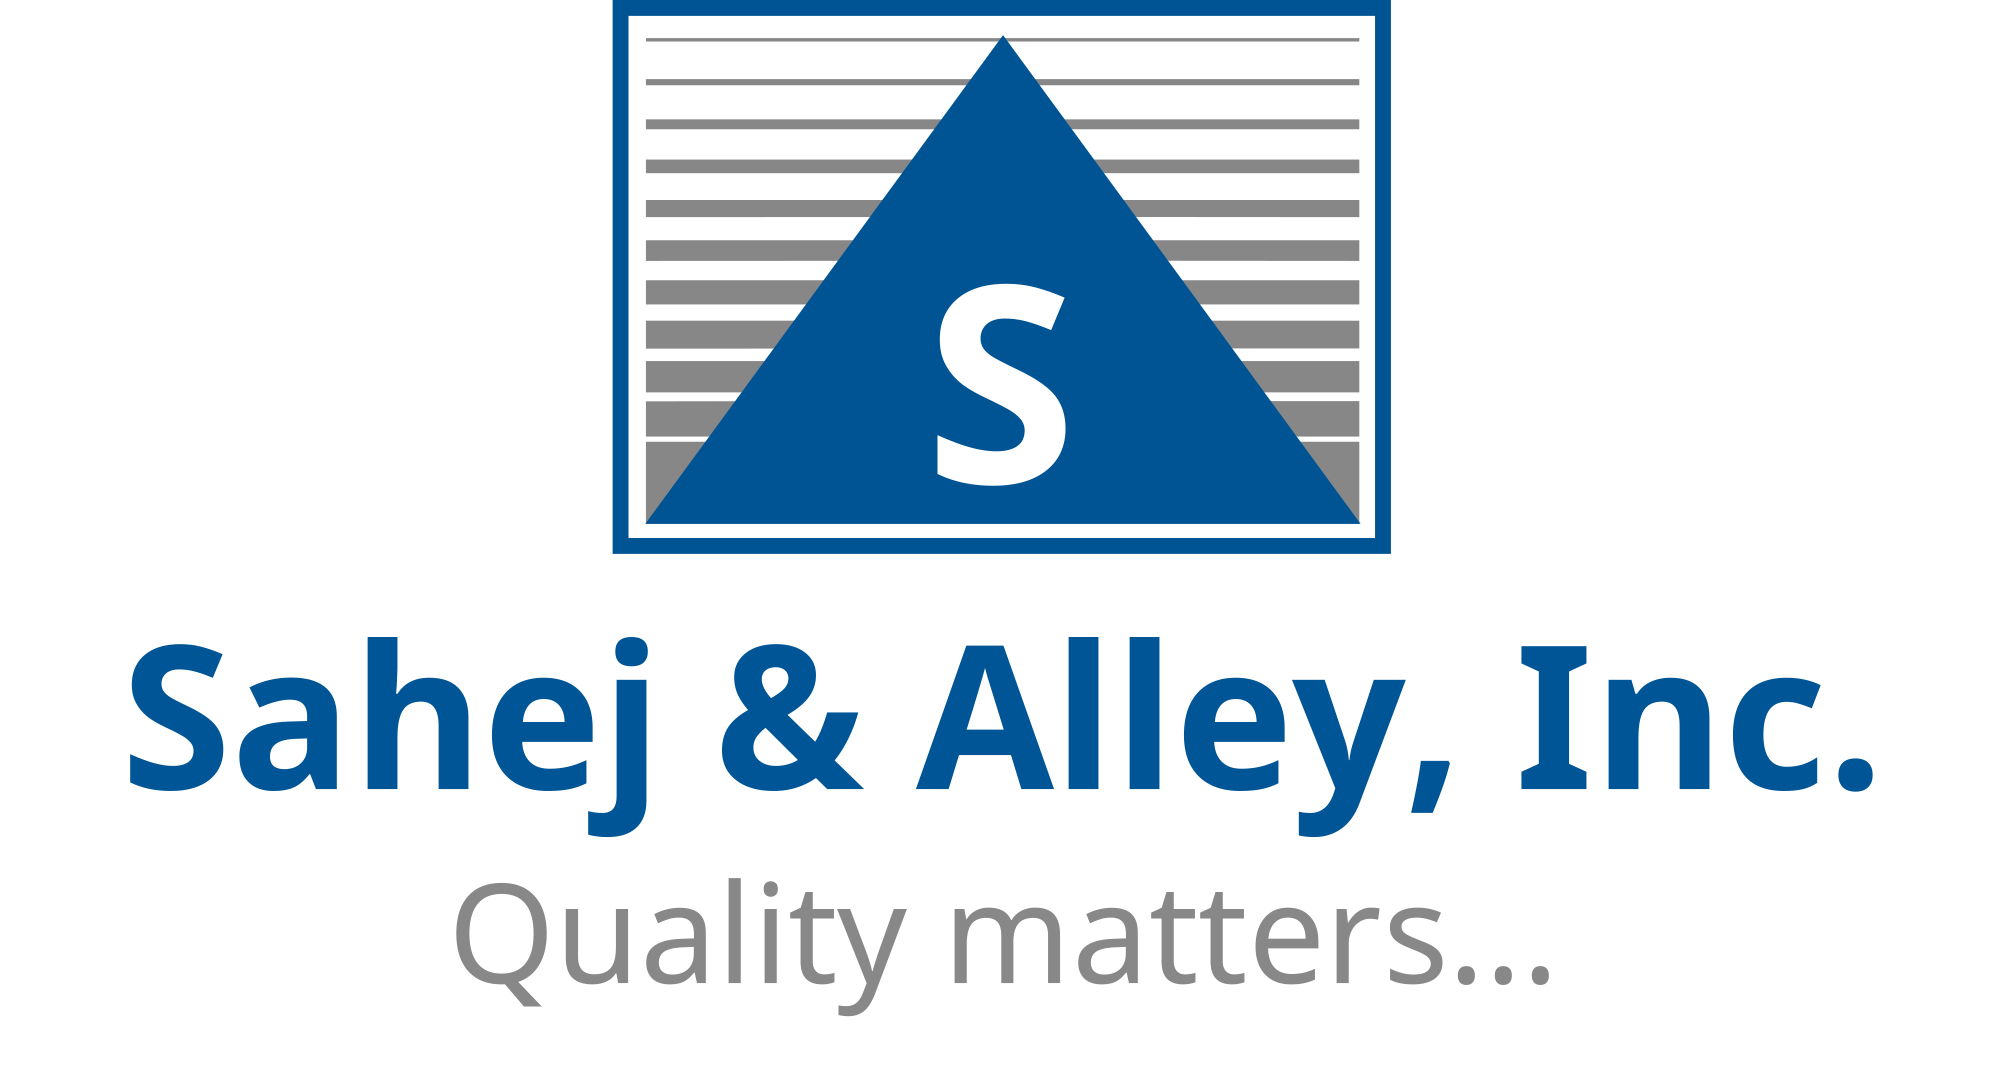 Sahej & Alley, Inc. doing business as Plumas Lake Chevron